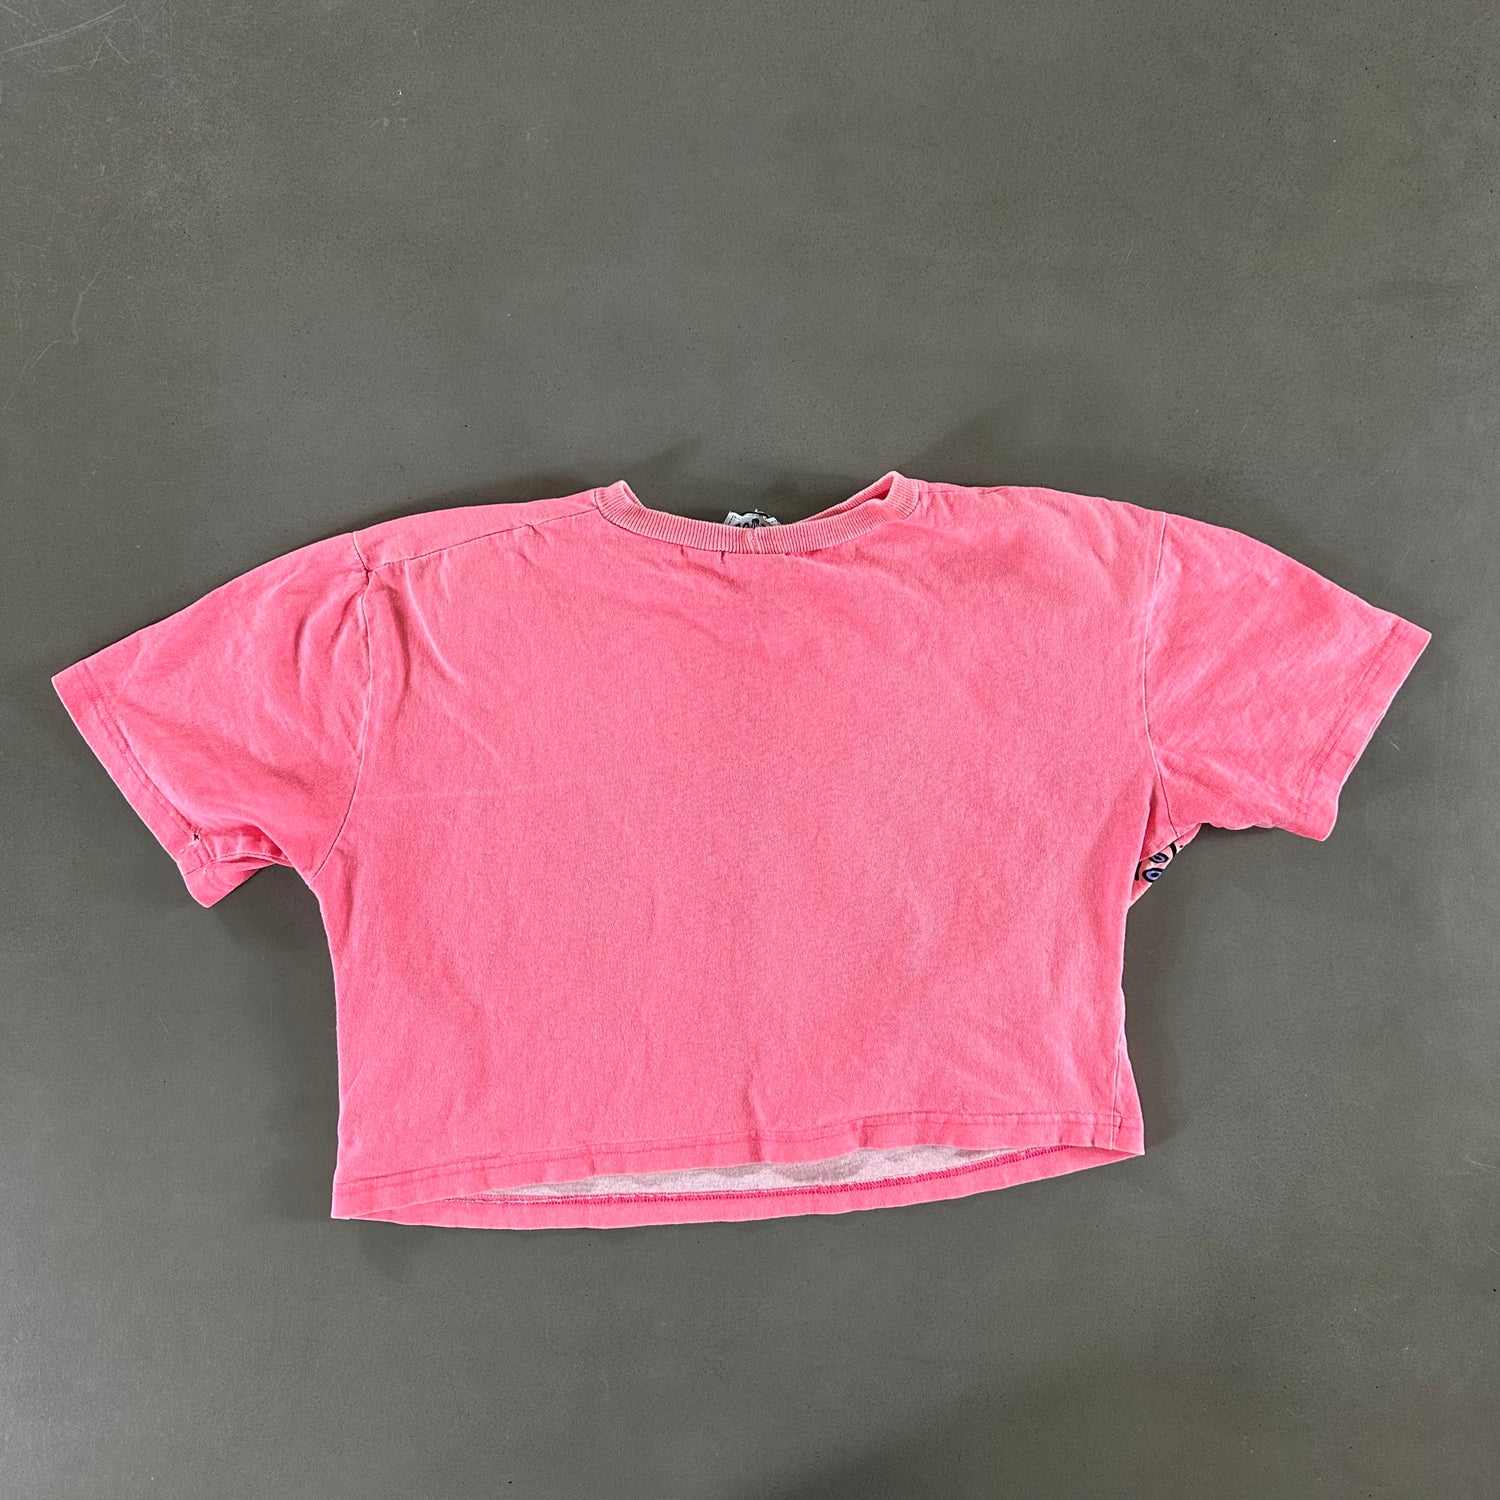 Vintage 1990s Neon Cropped T-shirt size Medium